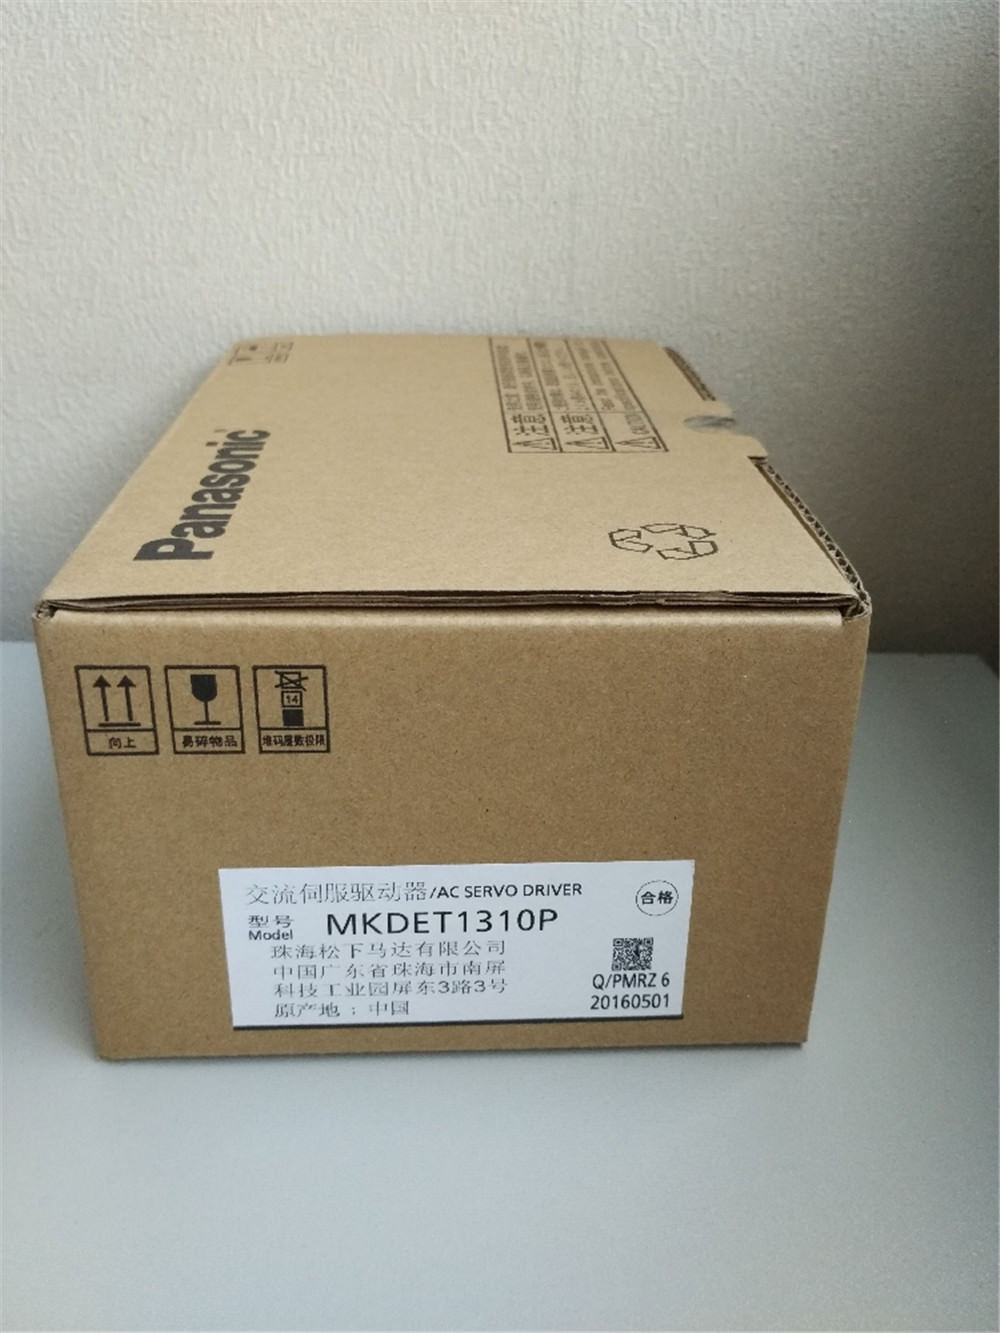 Original New PANASONIC AC Servo drive MKDET1310P in box - Click Image to Close